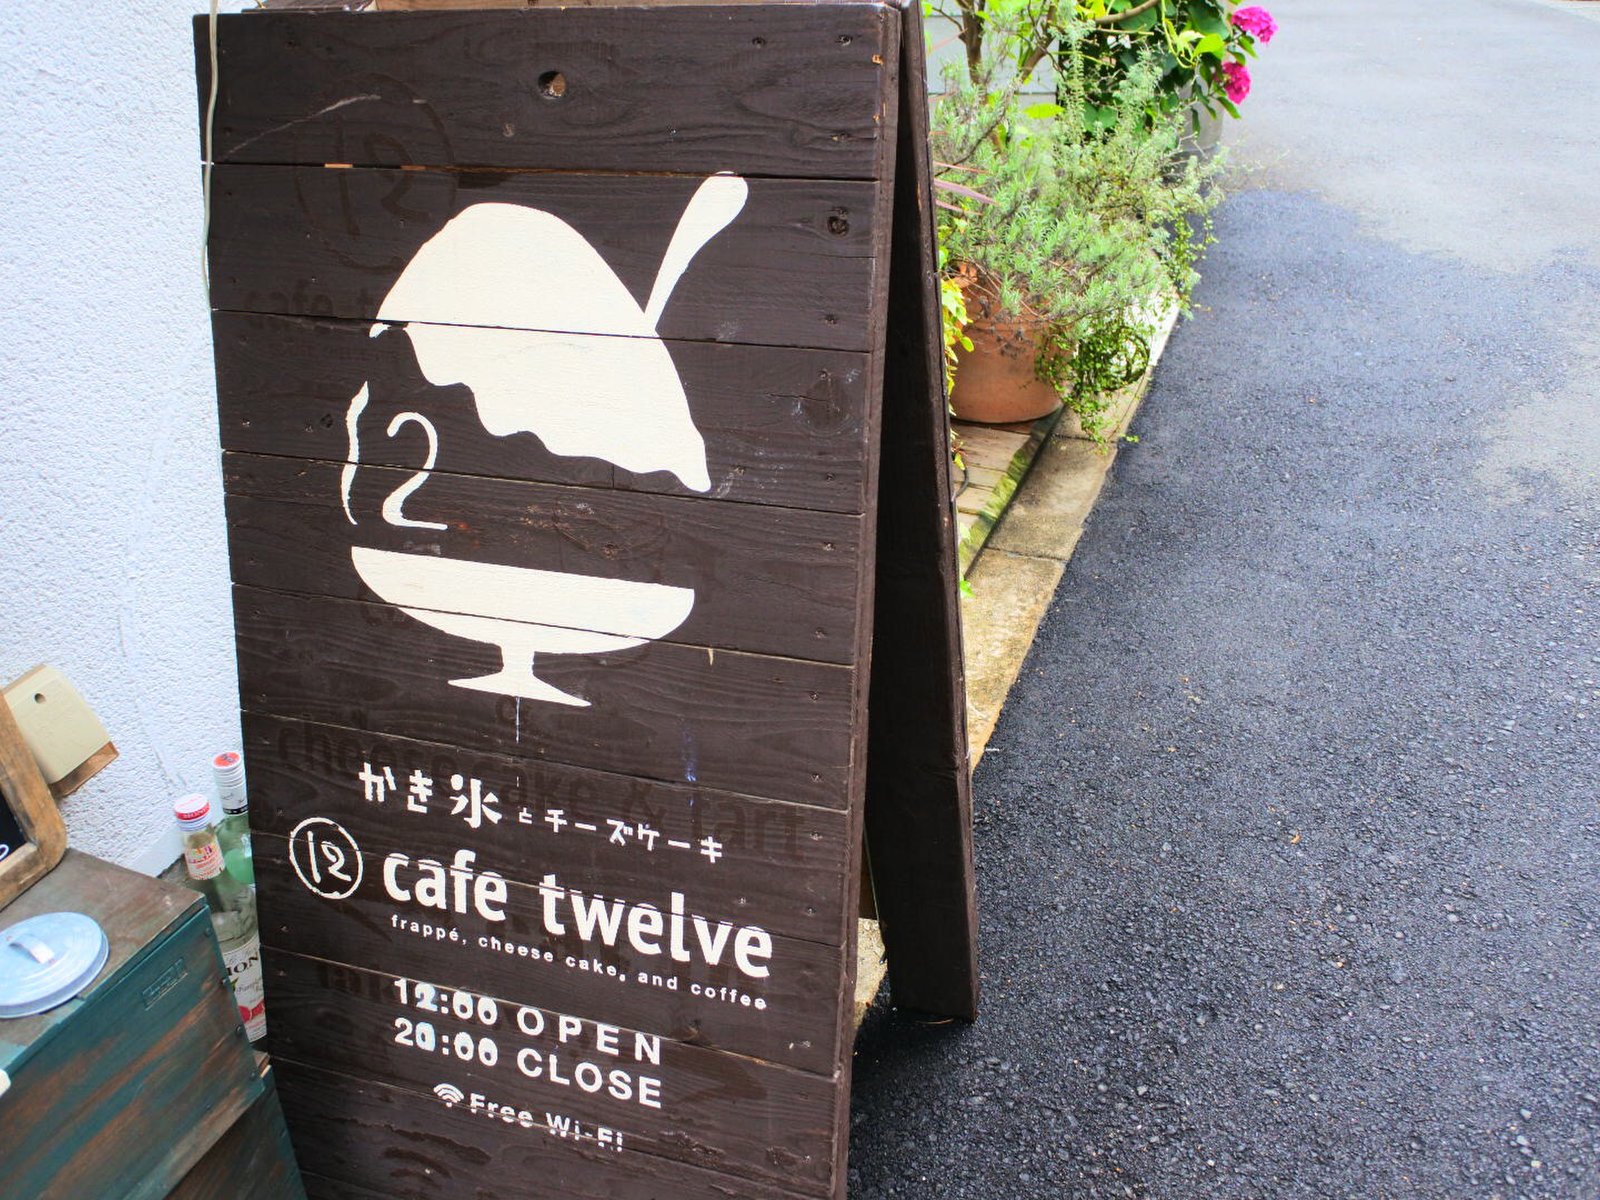 cafe12 